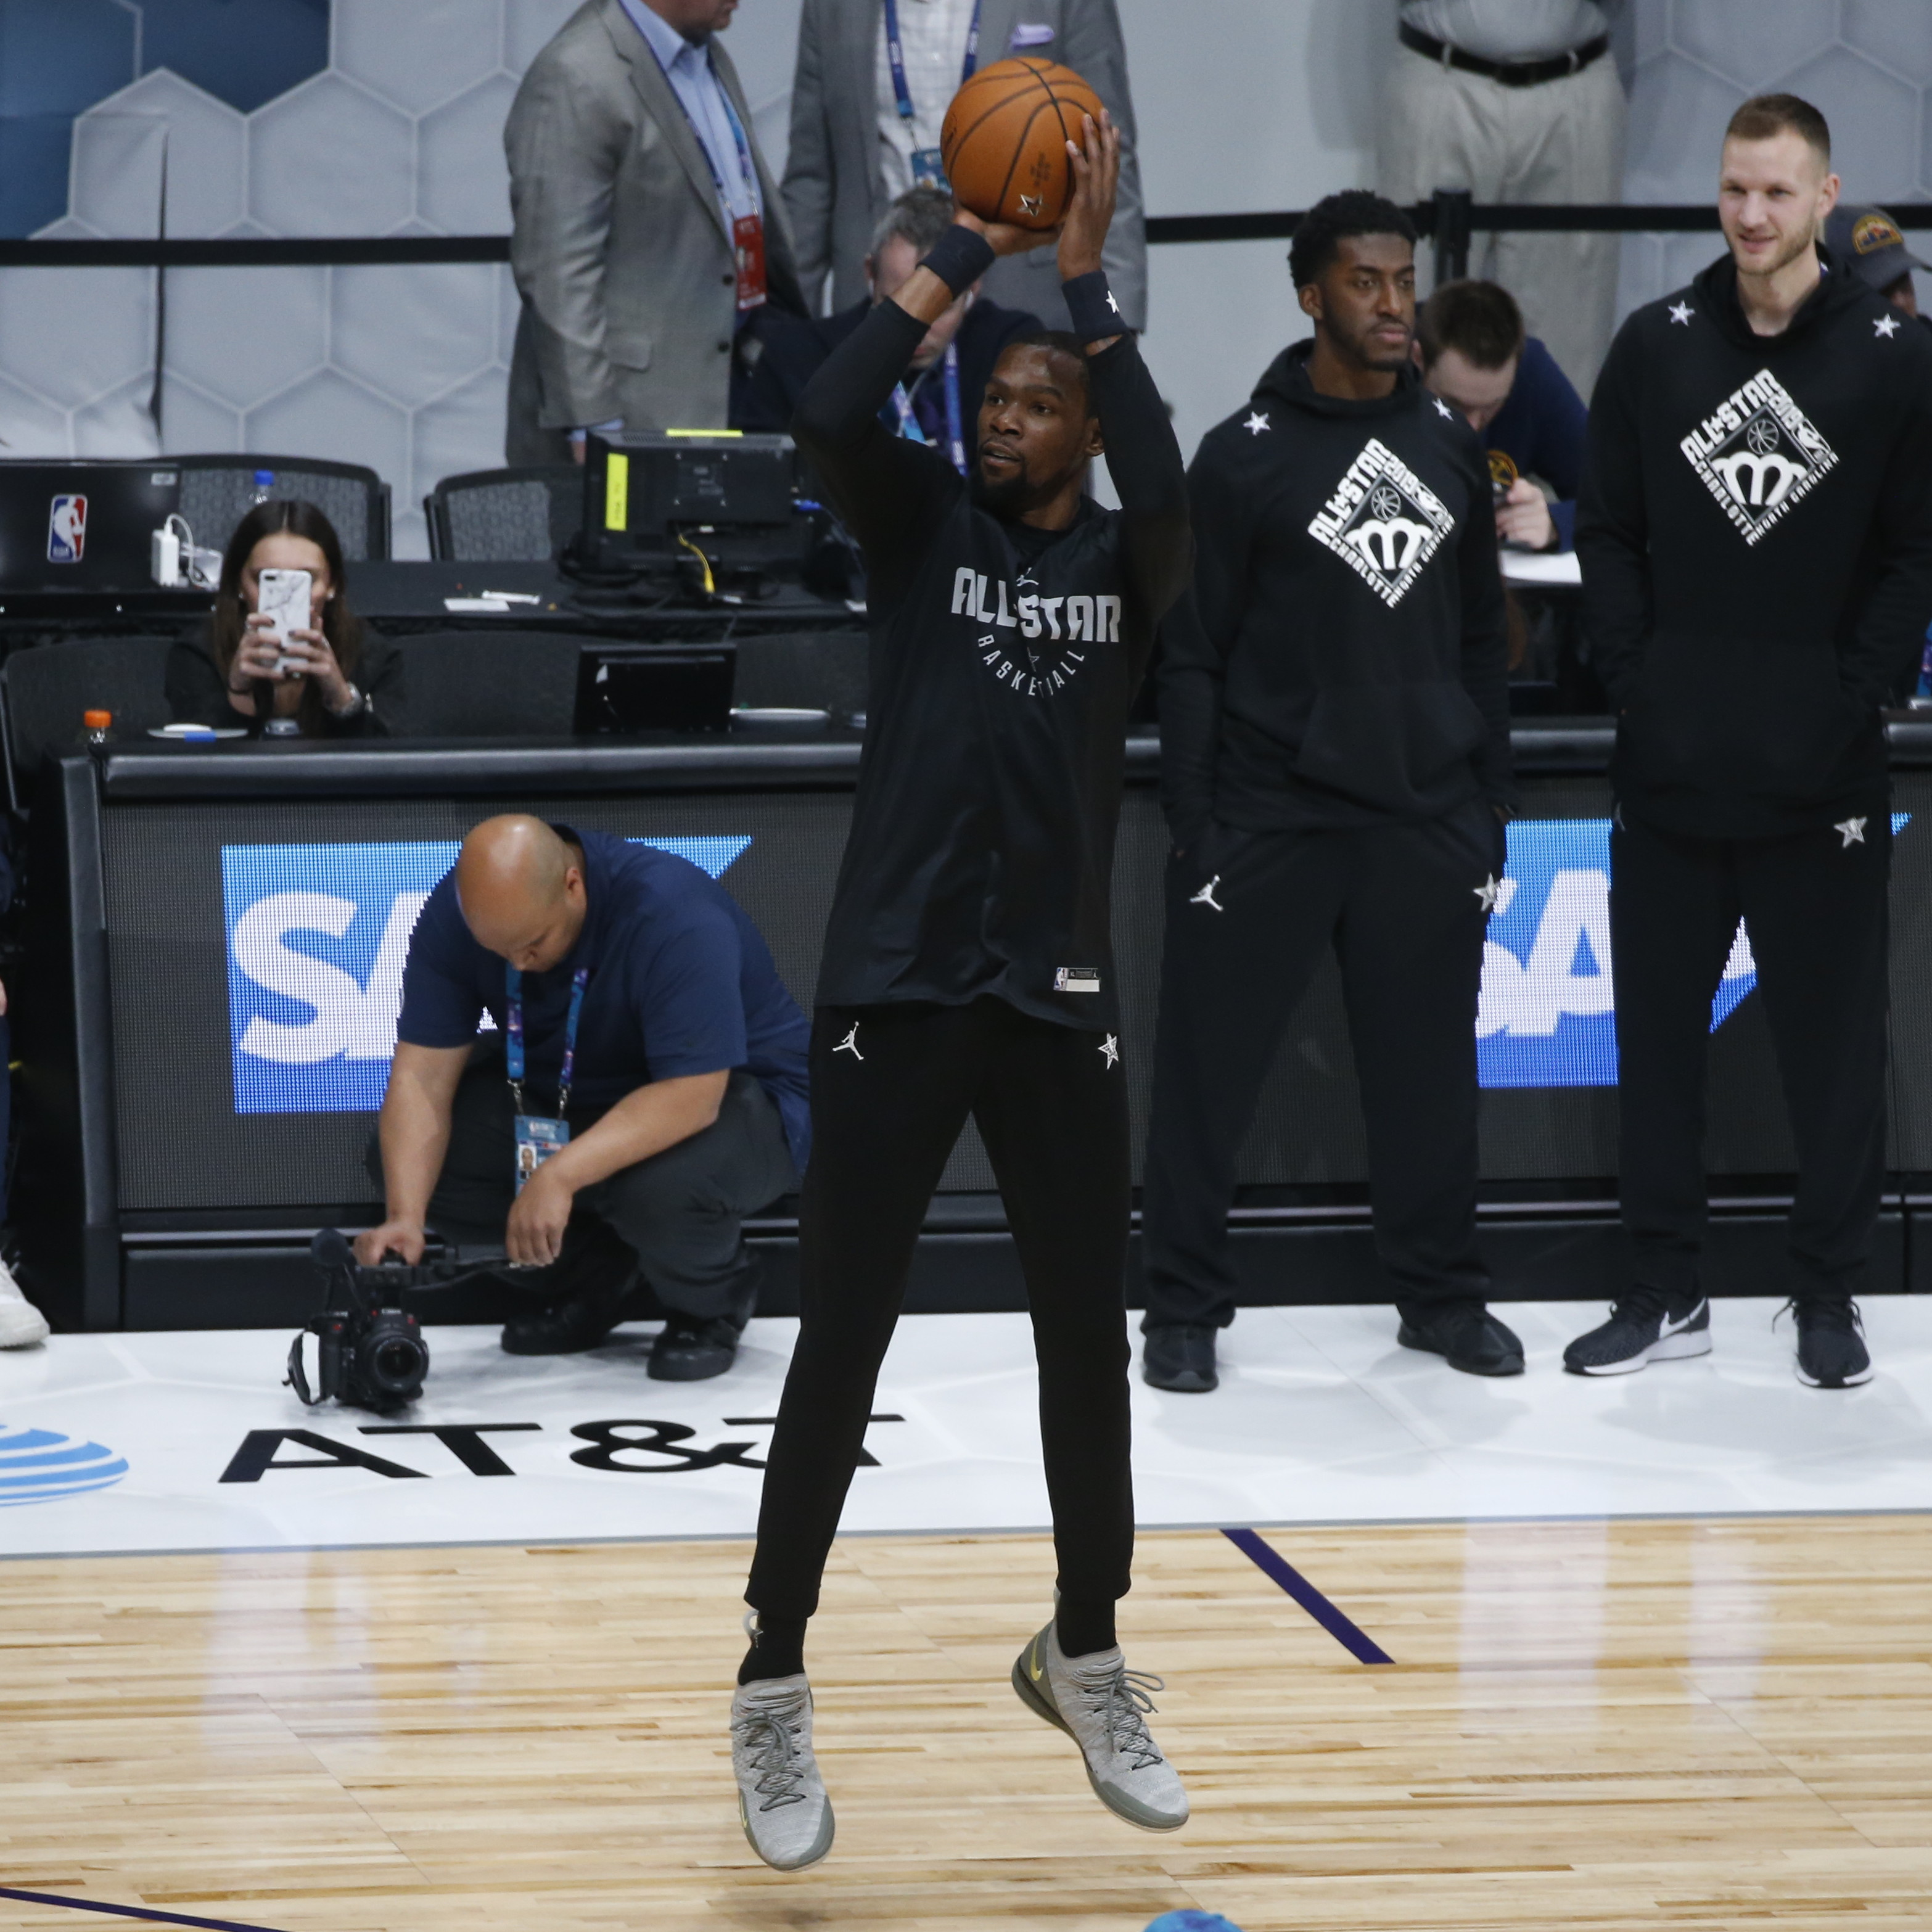 Photos: 2019 NBA All-Star Practice Photo Gallery